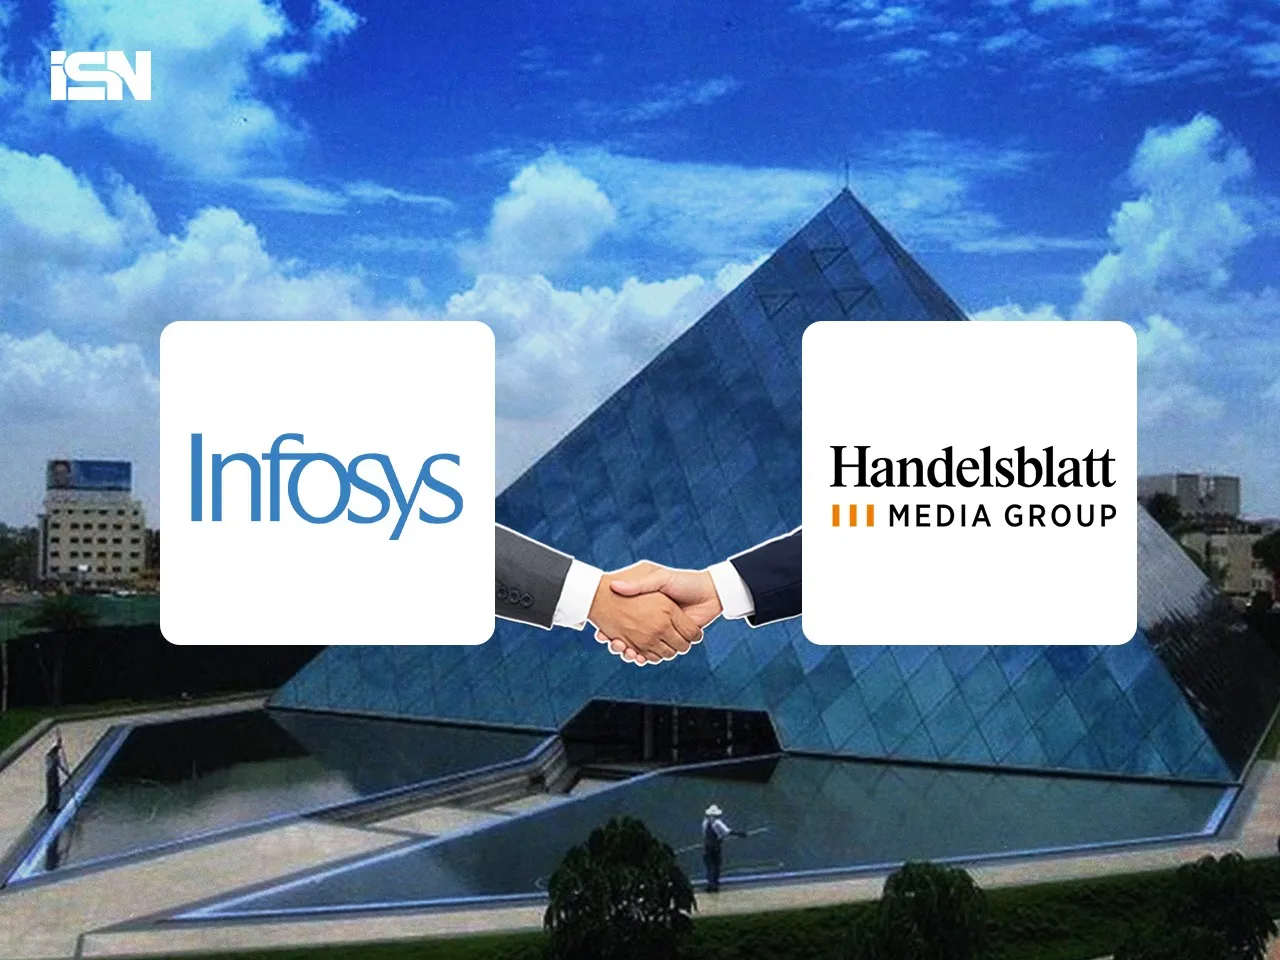 Infosys partners with Handelsblatt Media Group